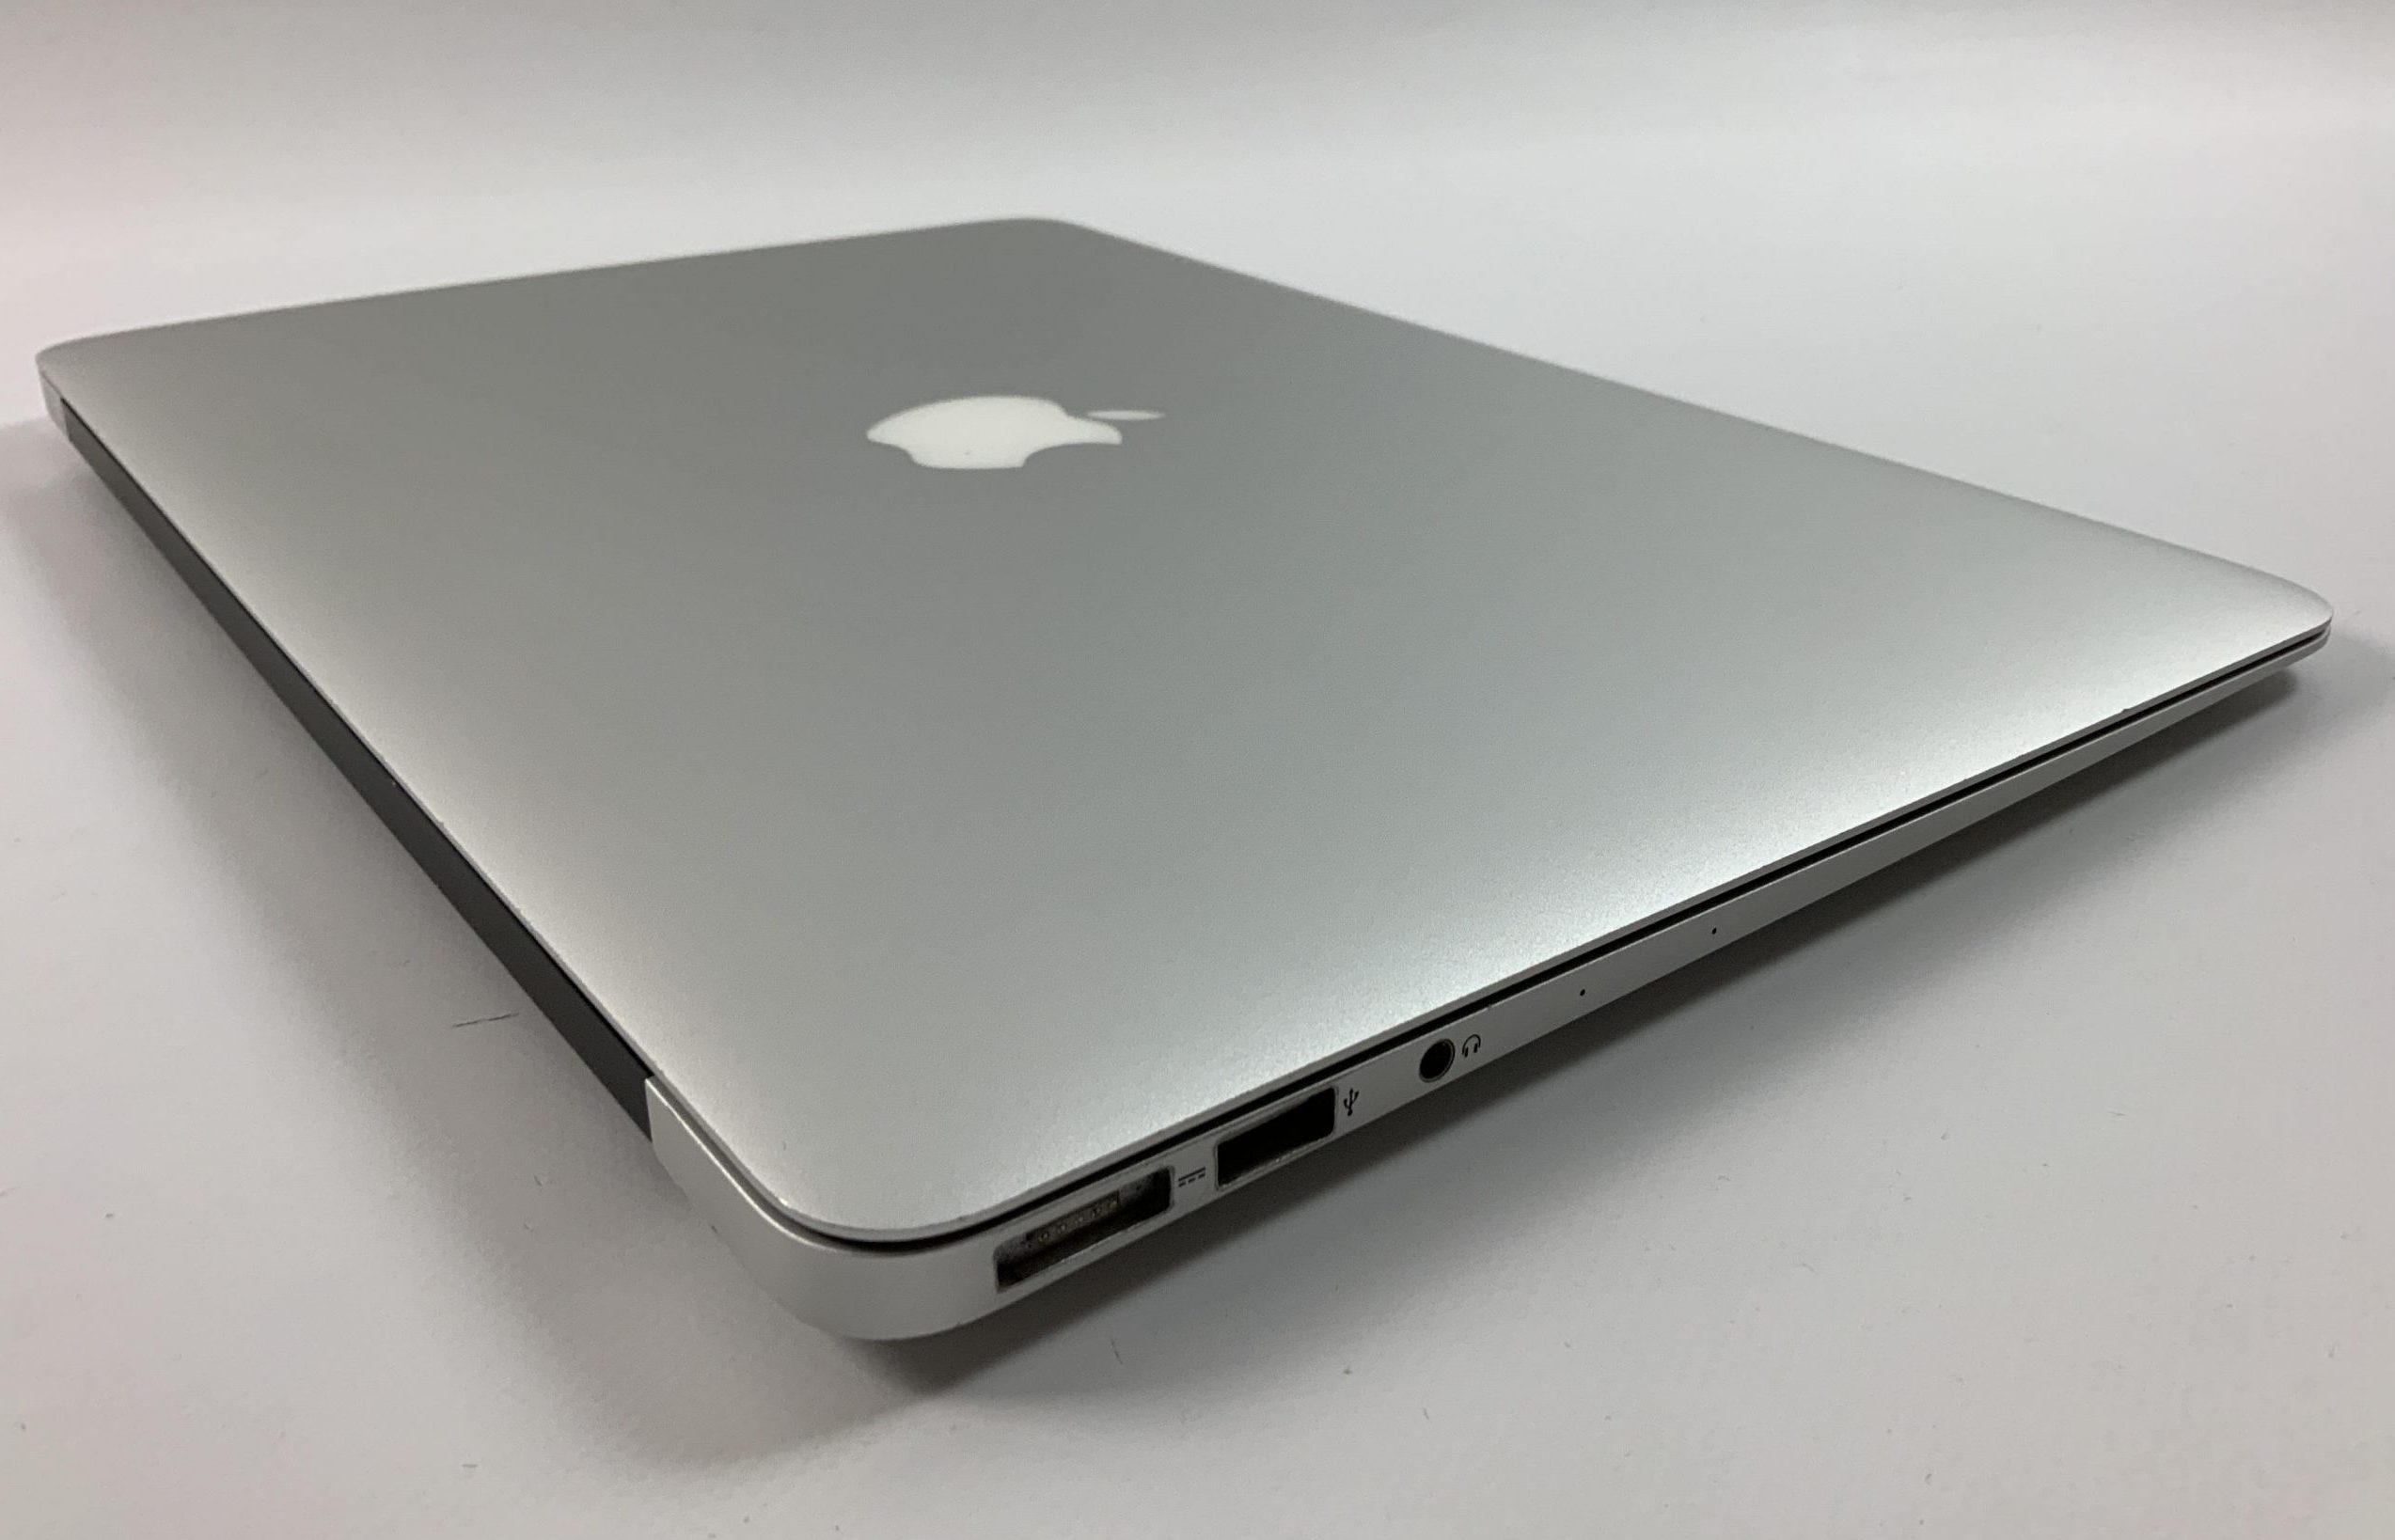 MacBook Air 13" Early 2014 (Intel Core i7 1.7 GHz 8 GB RAM 512 GB SSD), Intel Core i7 1.7 GHz, 8 GB RAM, 512 GB SSD, bild 4